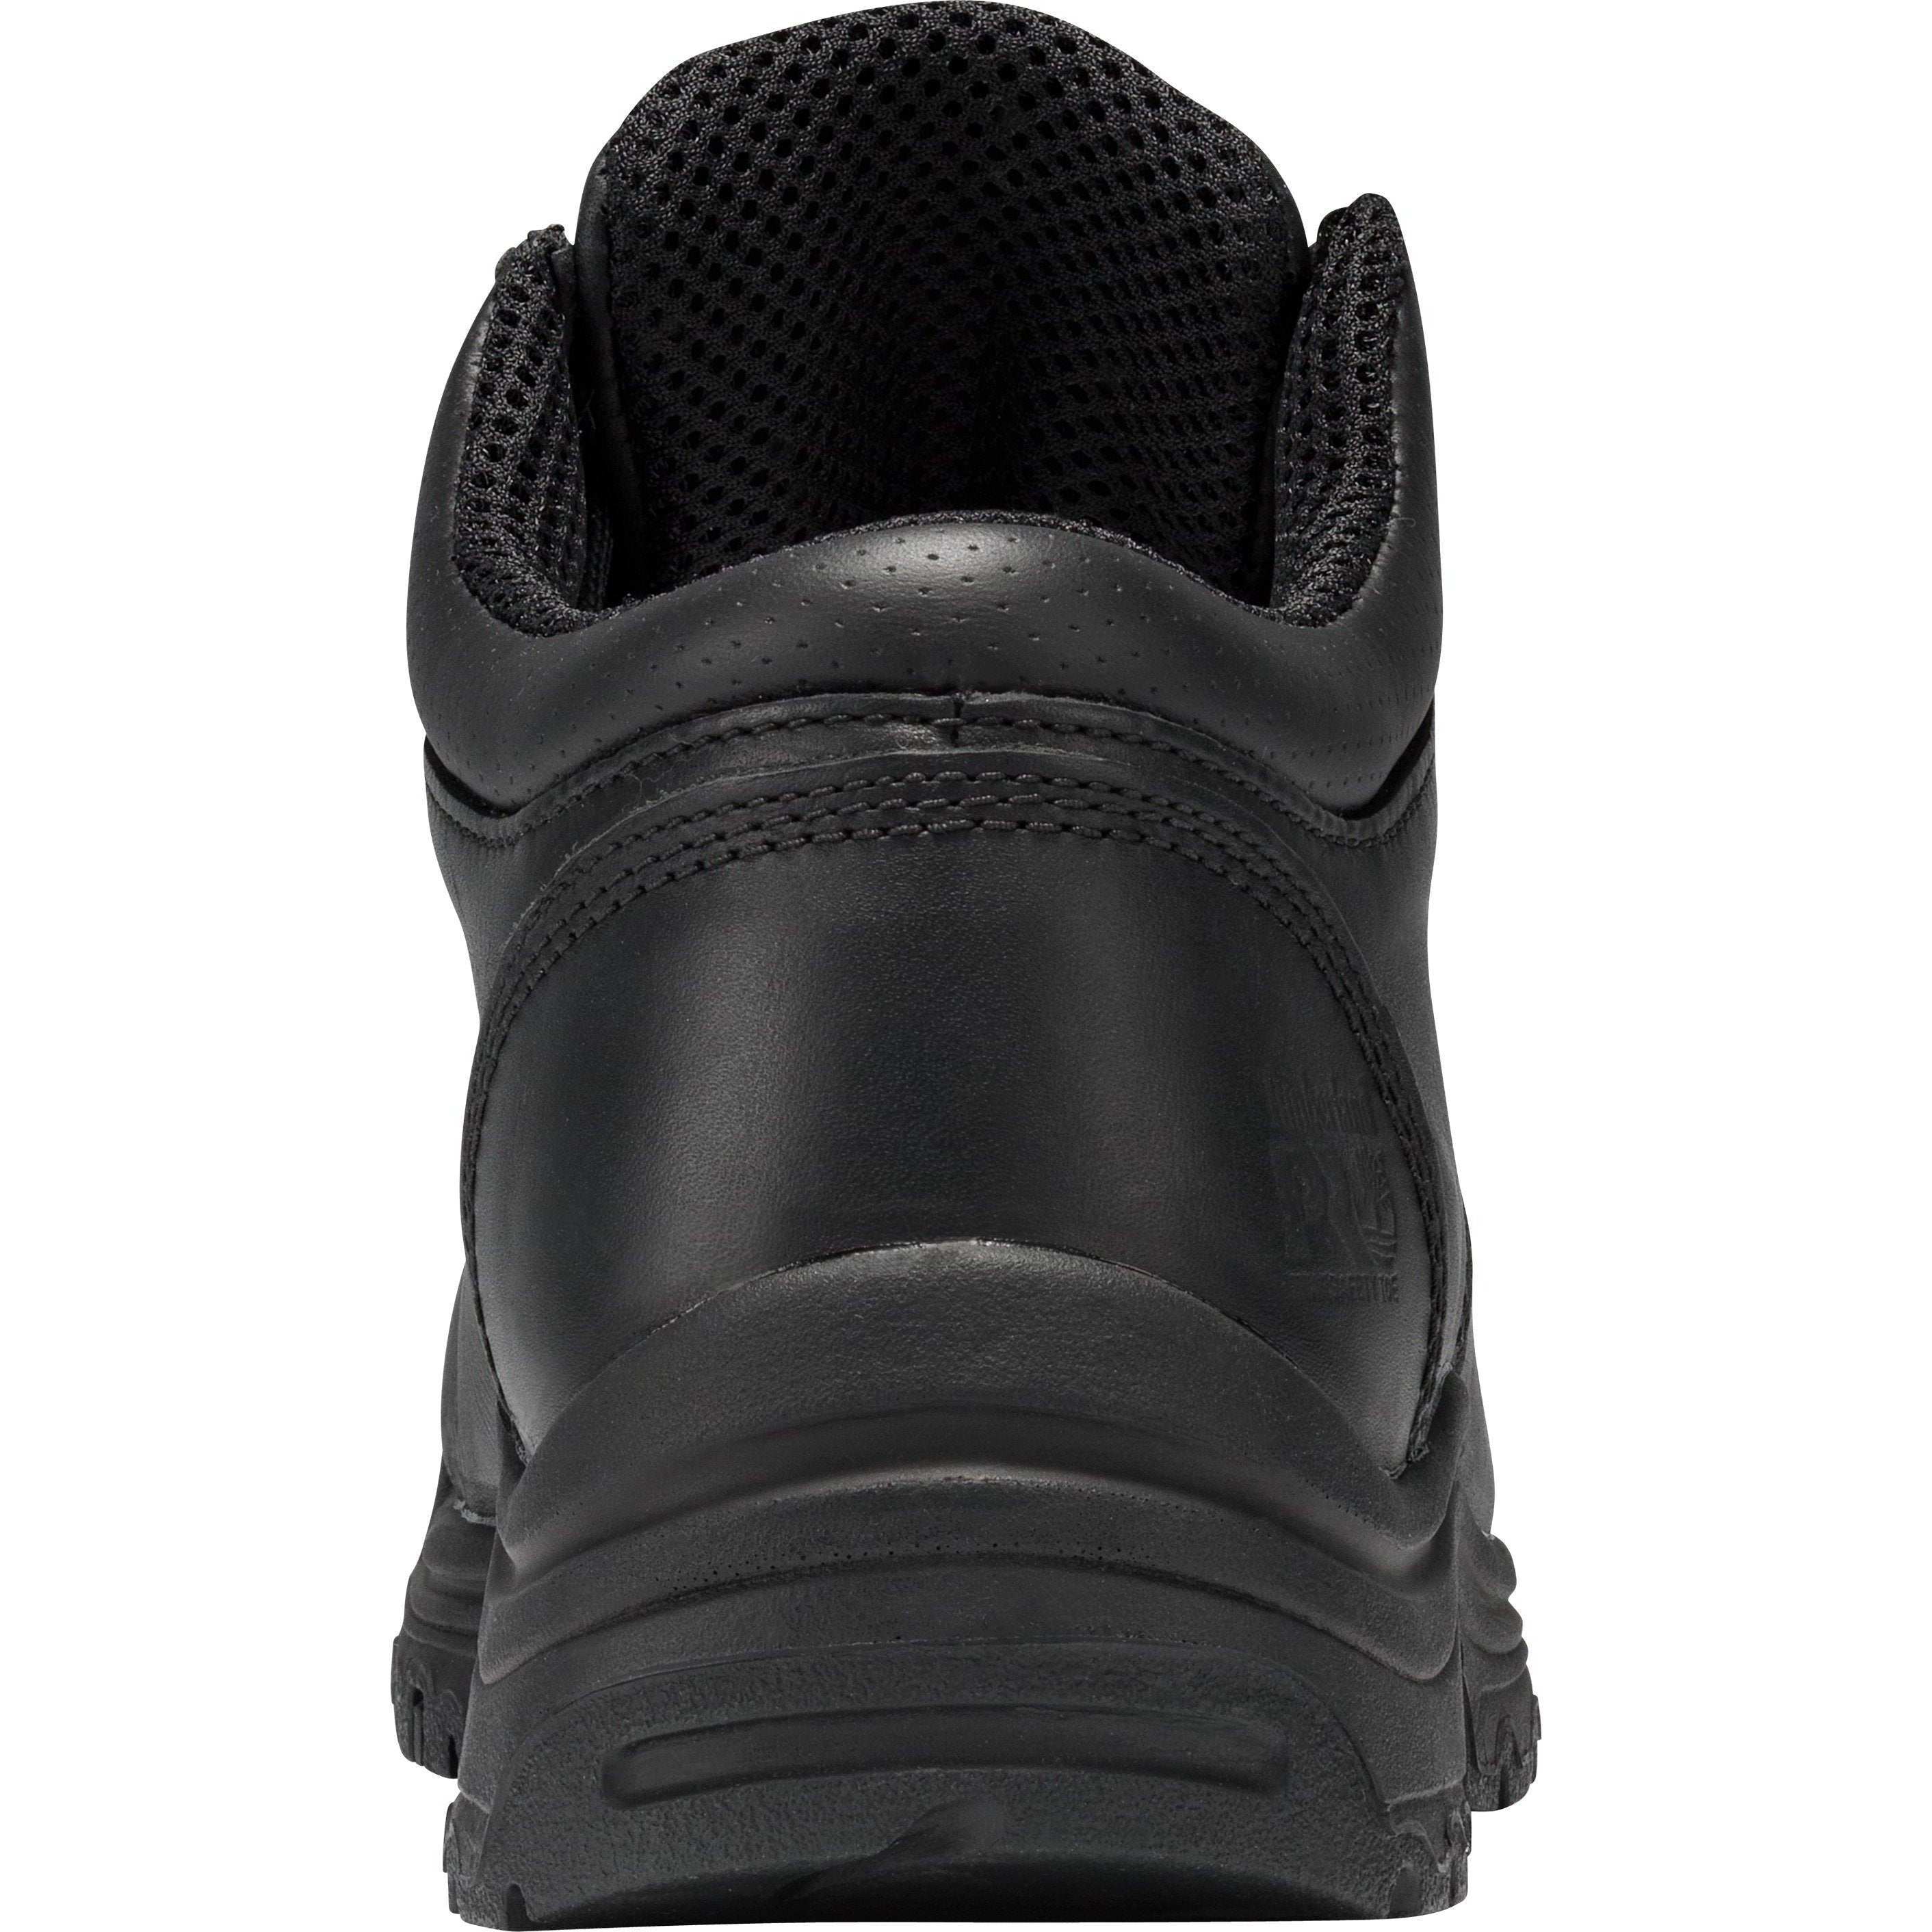 Timberland PRO Men's TiTAN Oxford Alloy Toe Work Shoe Black TB040044001  - Overlook Boots